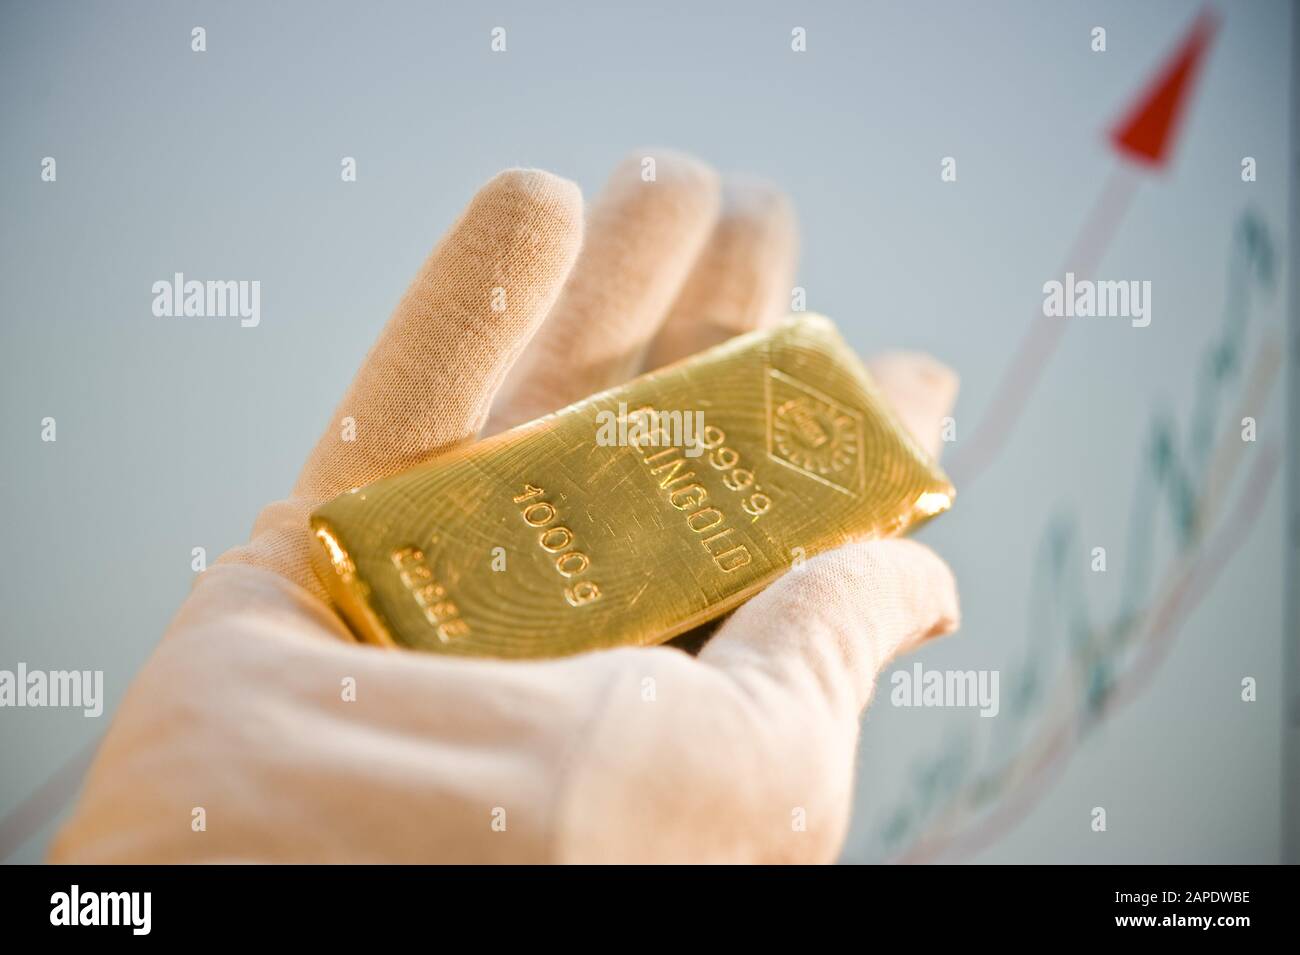 Ein Goldbarren 1 kg - Gold Bar Stock Photo - Alamy